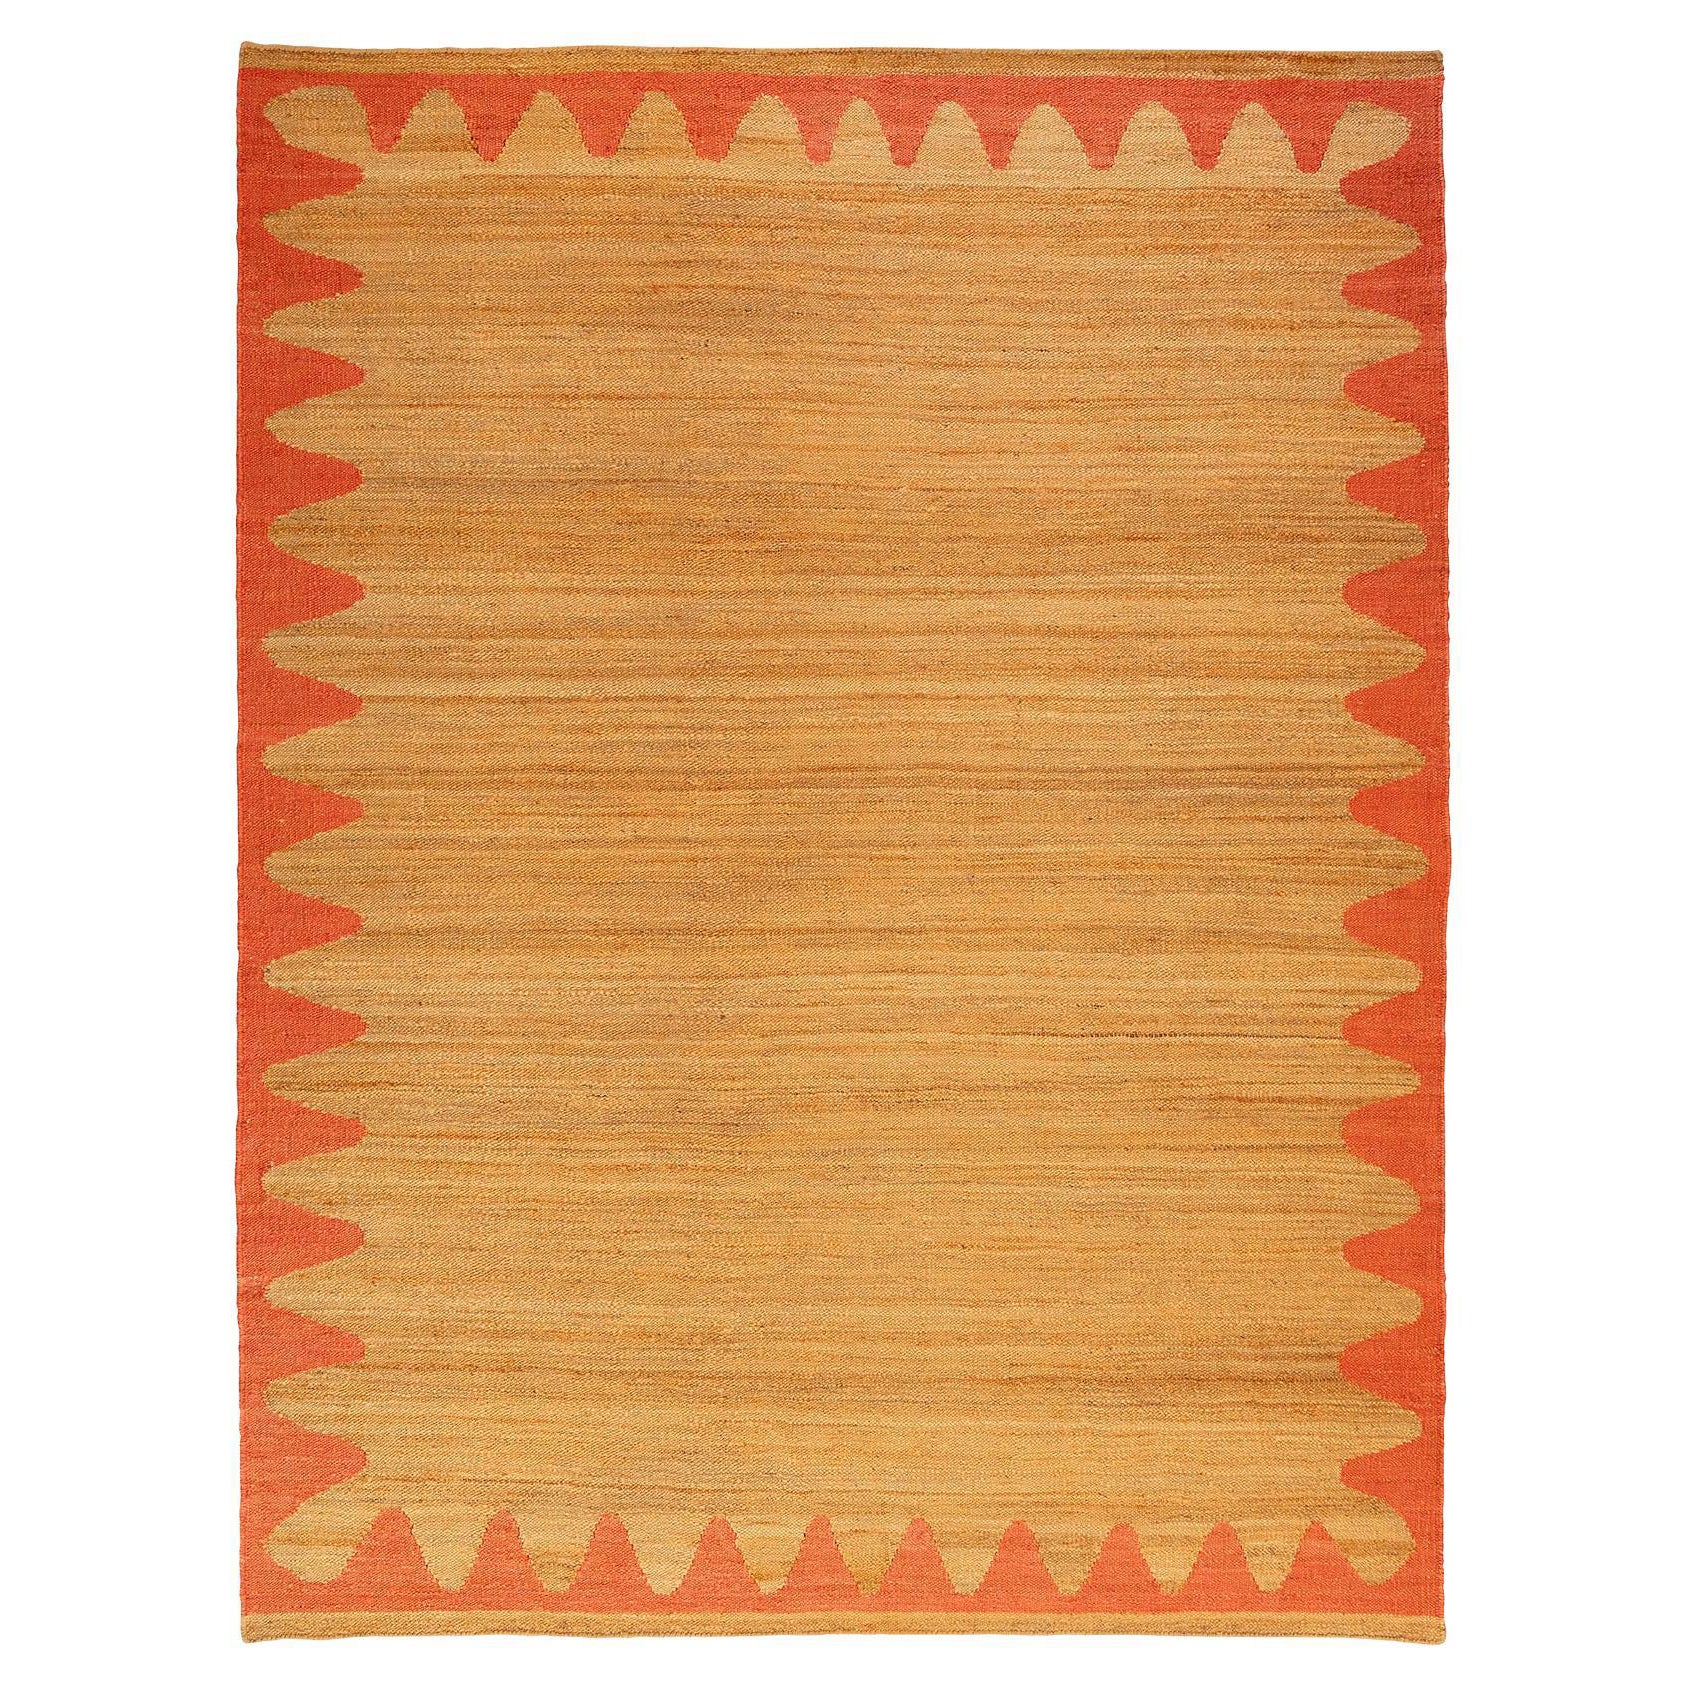 Modern Handwoven Jute Carpet Rug Kilim in Natural & Coral